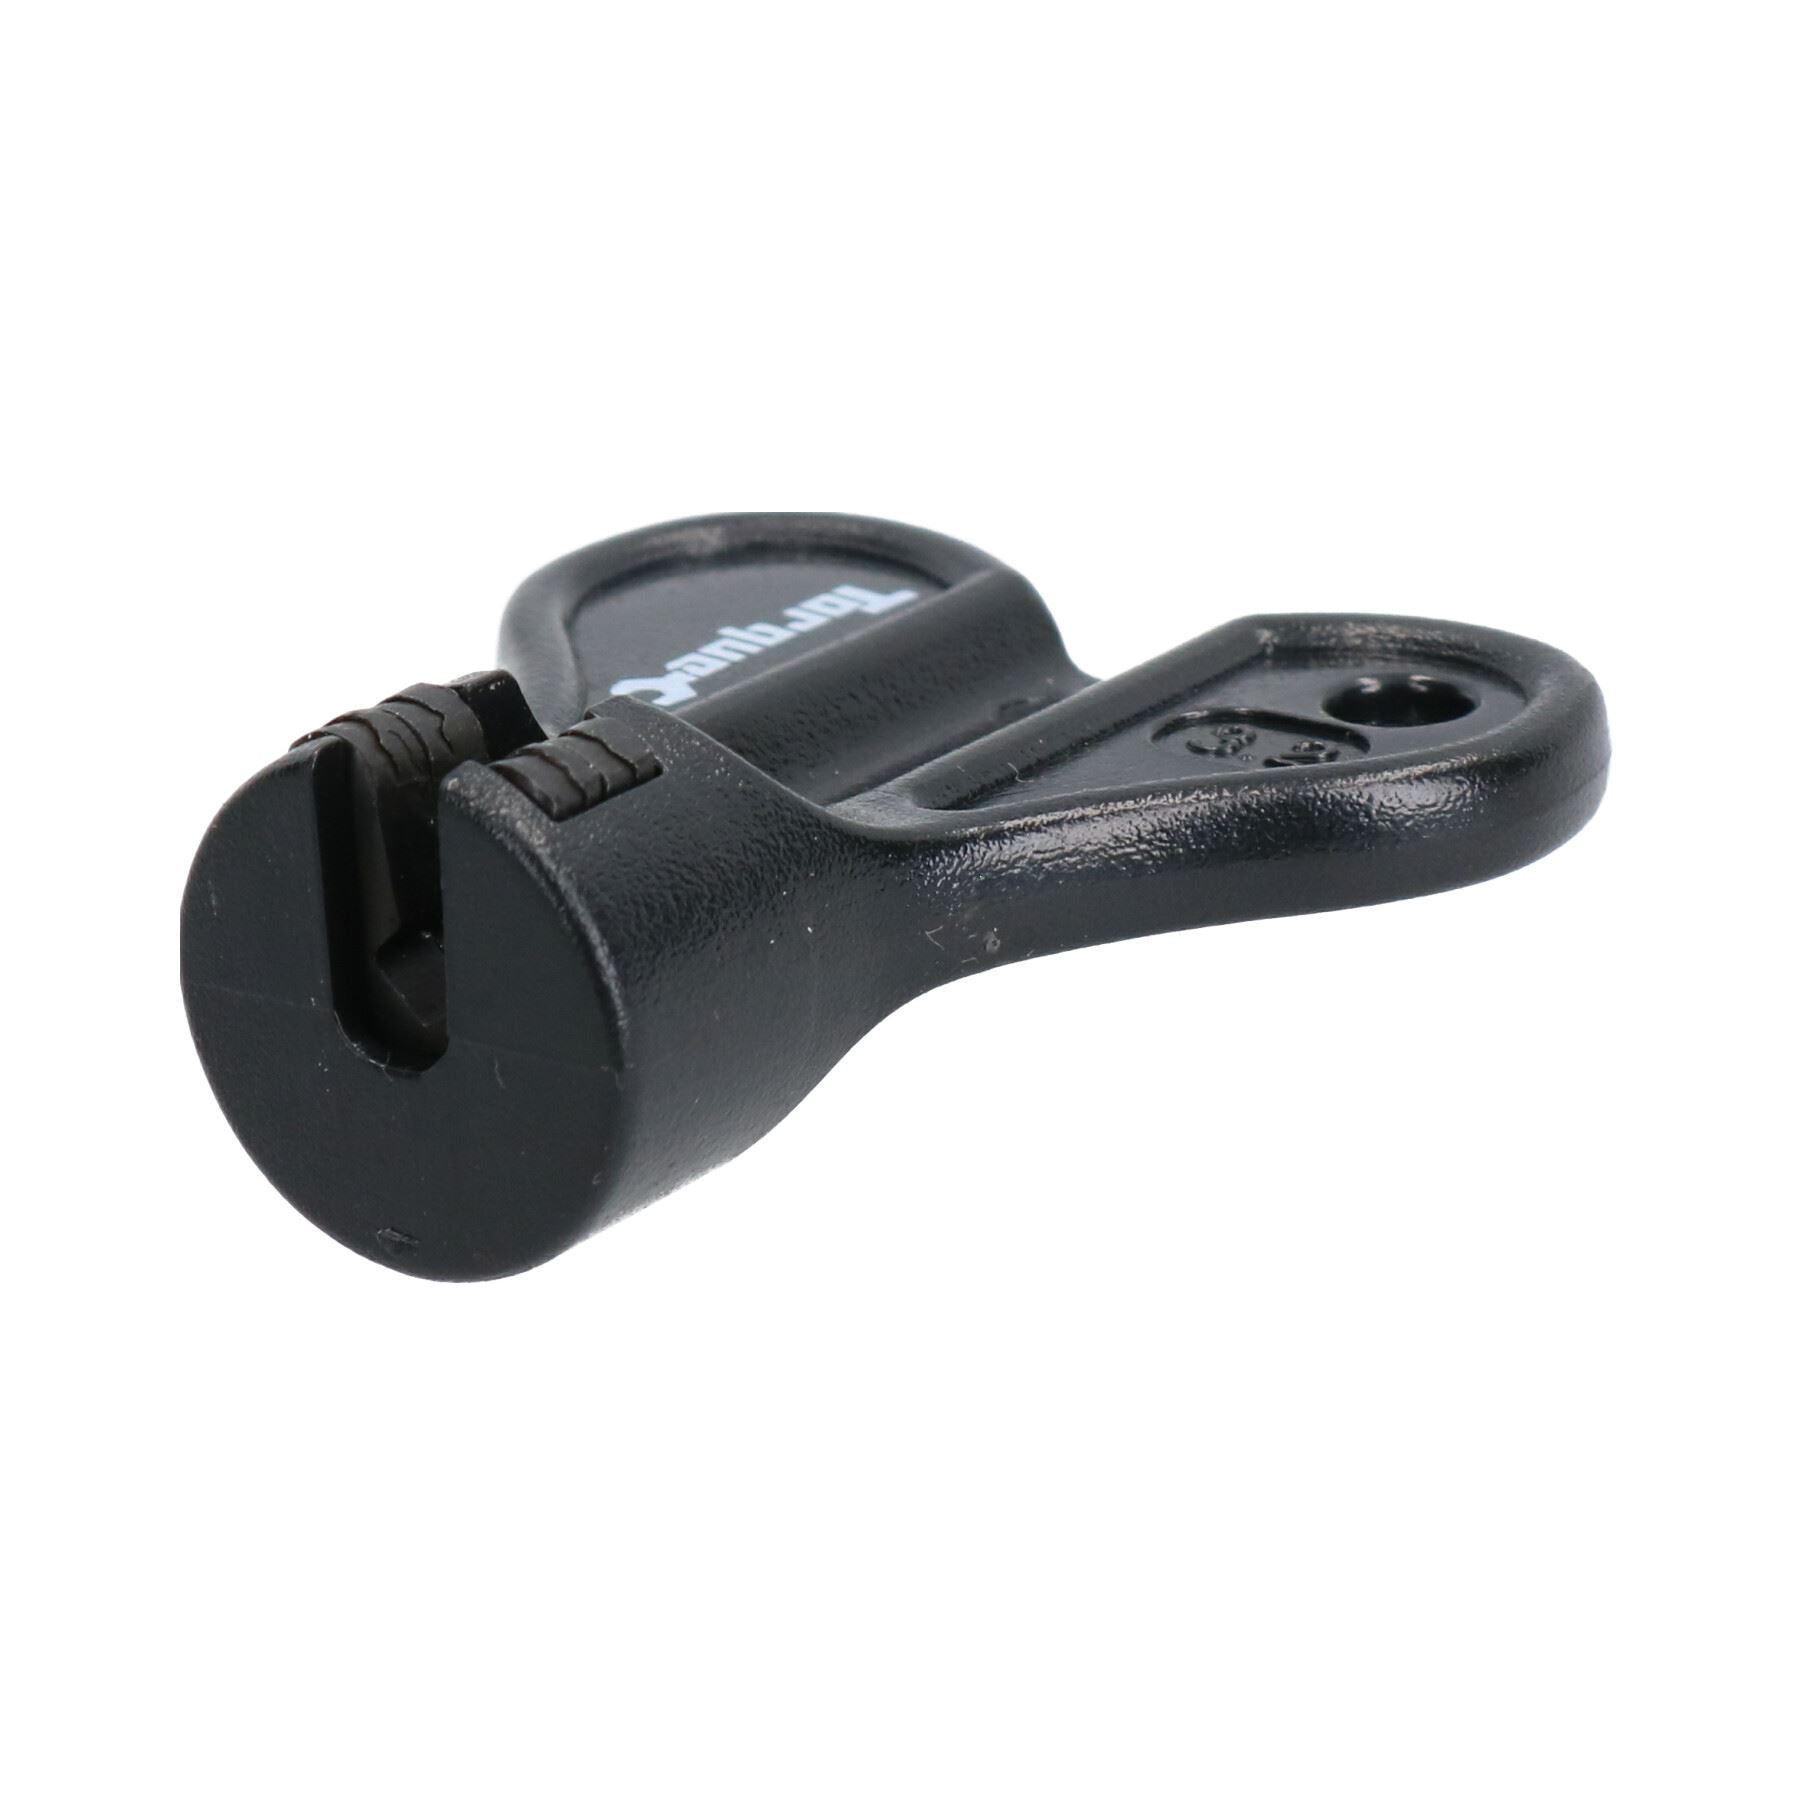 Spoke Key 3.2mm Nipple Bike Cycle Wheel Wrench Adjuster